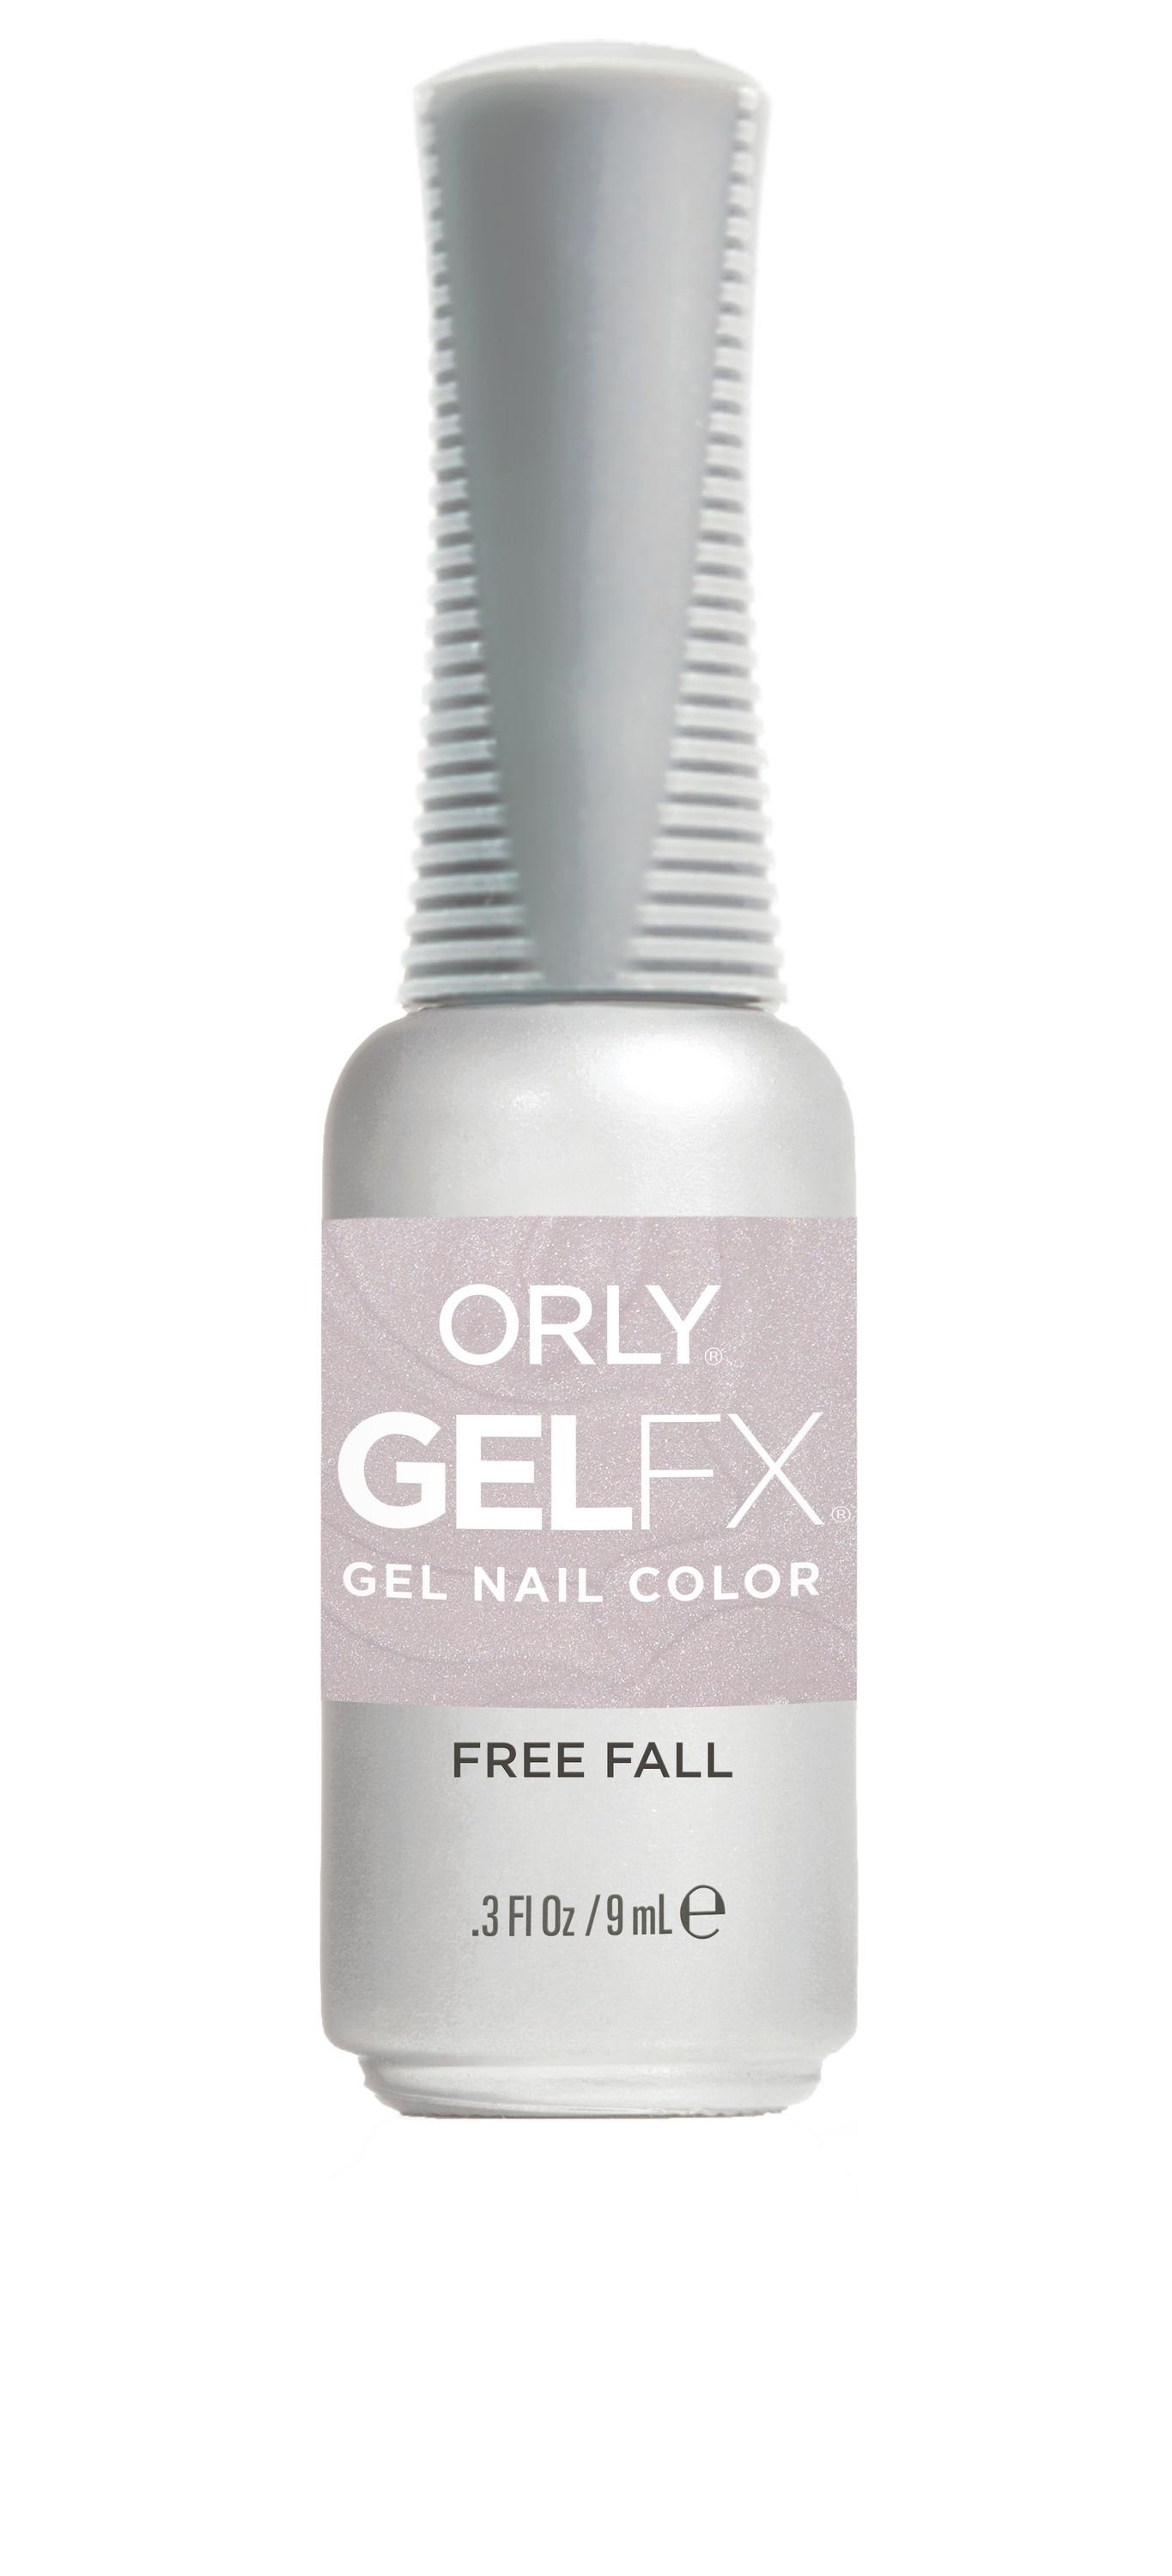 ORLY UV-Nagellack GEL FX Free Fall, 9ML